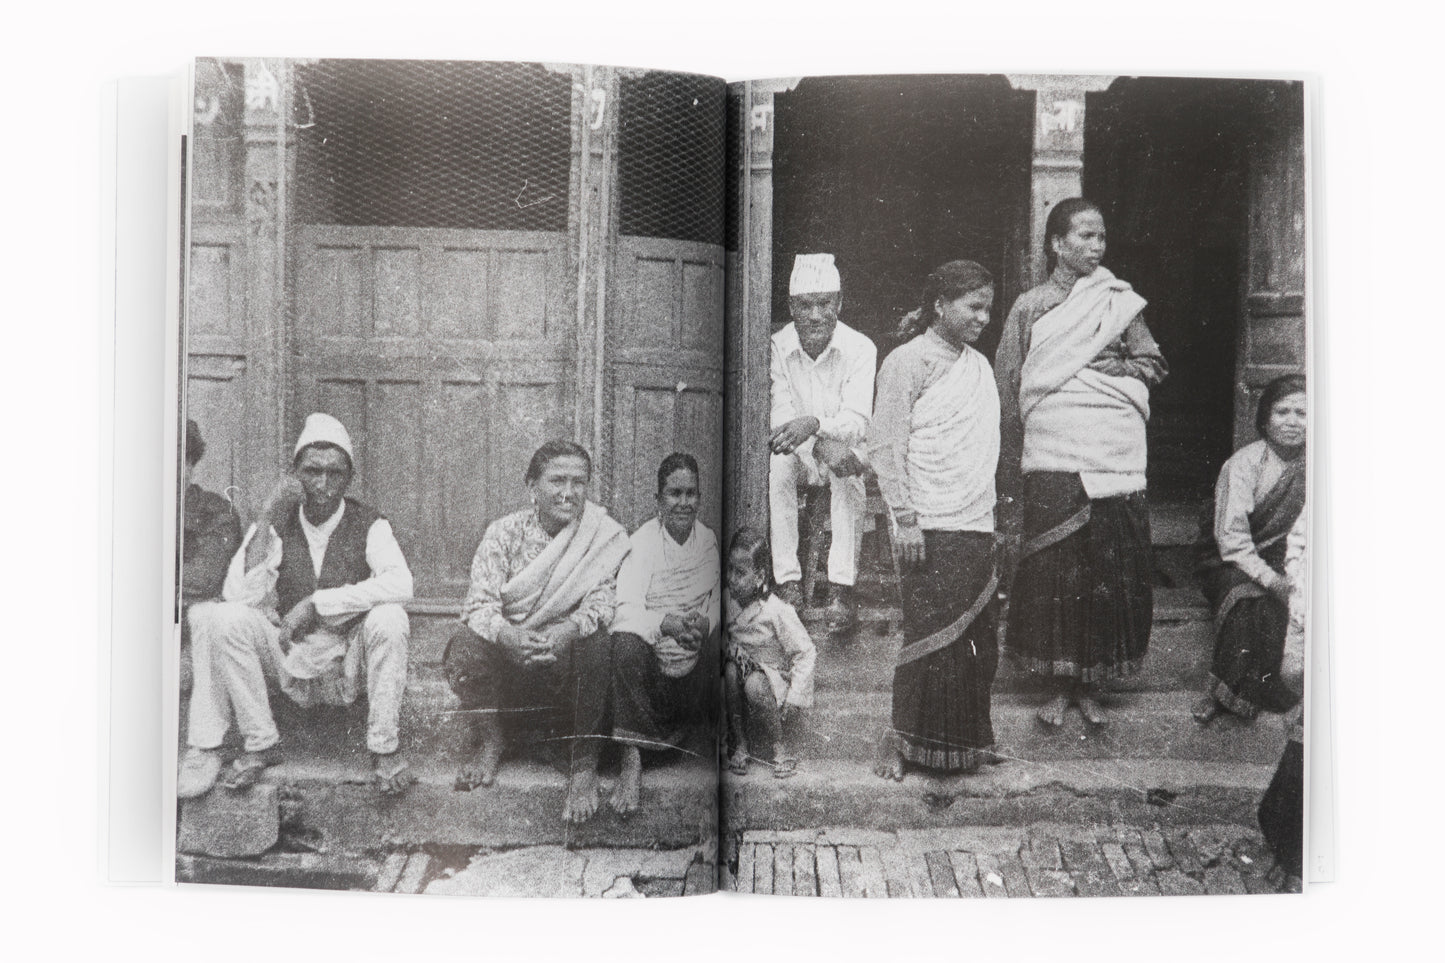 JUJU BHAI DHAKWA – KEEPER OF MEMORIES  Nepal Picture Library